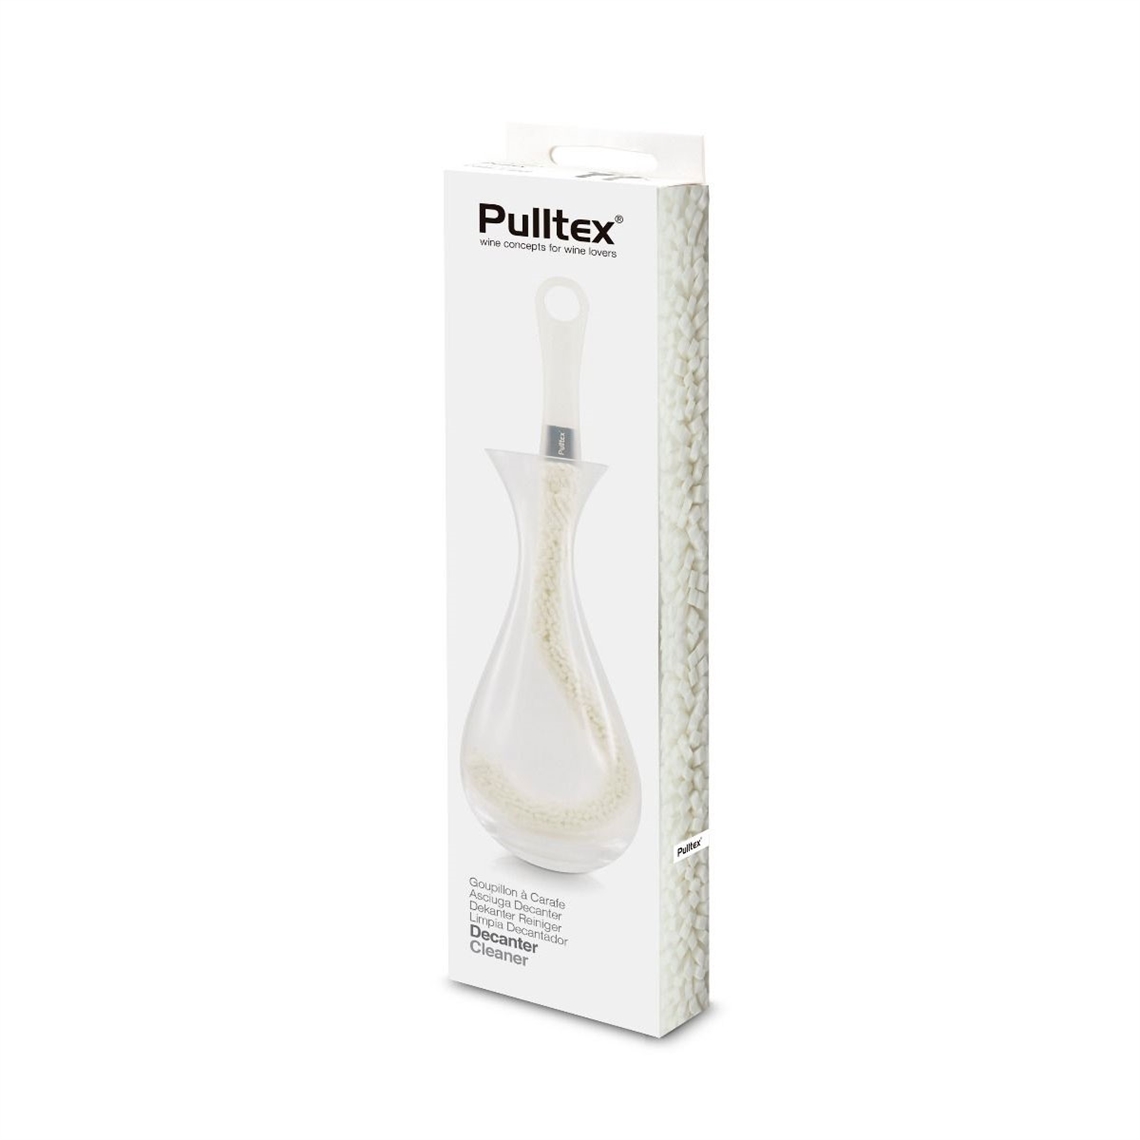 Pulltex Wine Decanter Brush & Glass Cleaning Brush - Set of 2